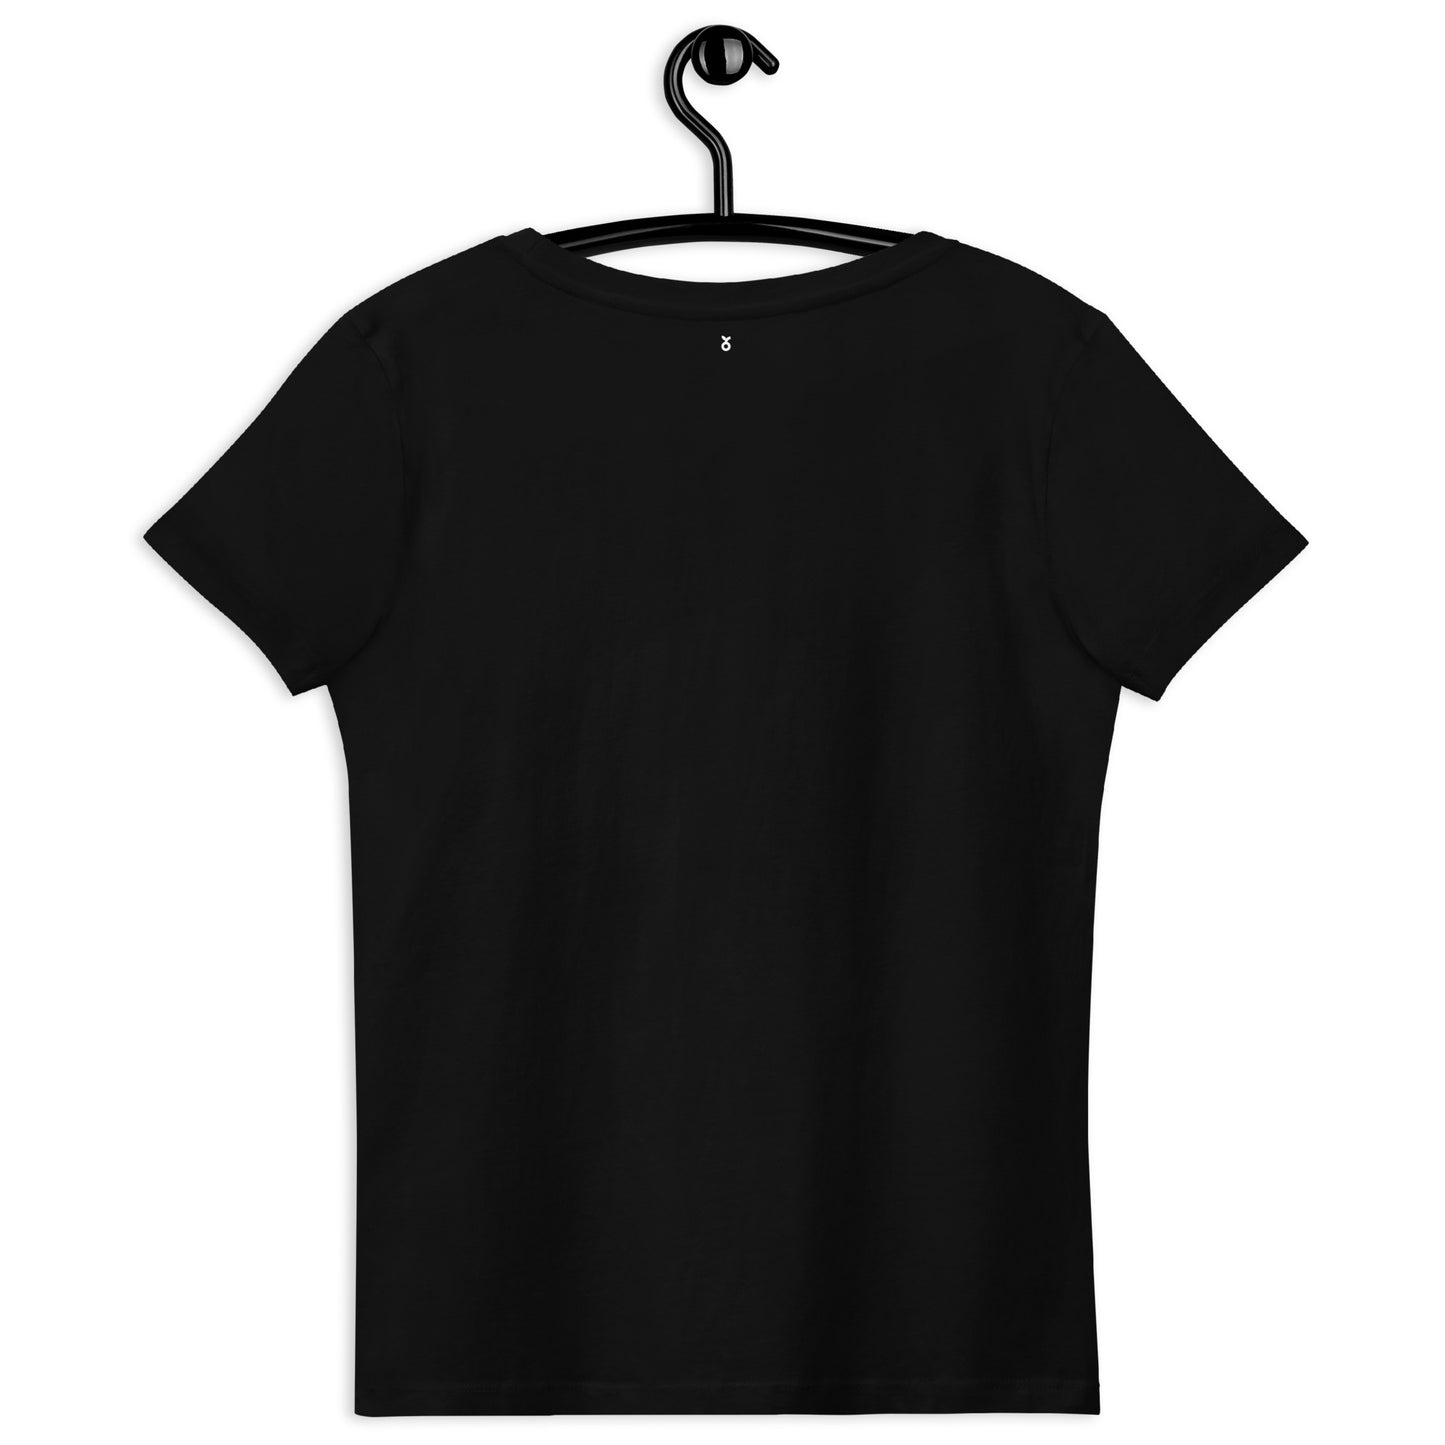 Embroidered spring birds Bauhaus style black T-shirt organic cotton - Women